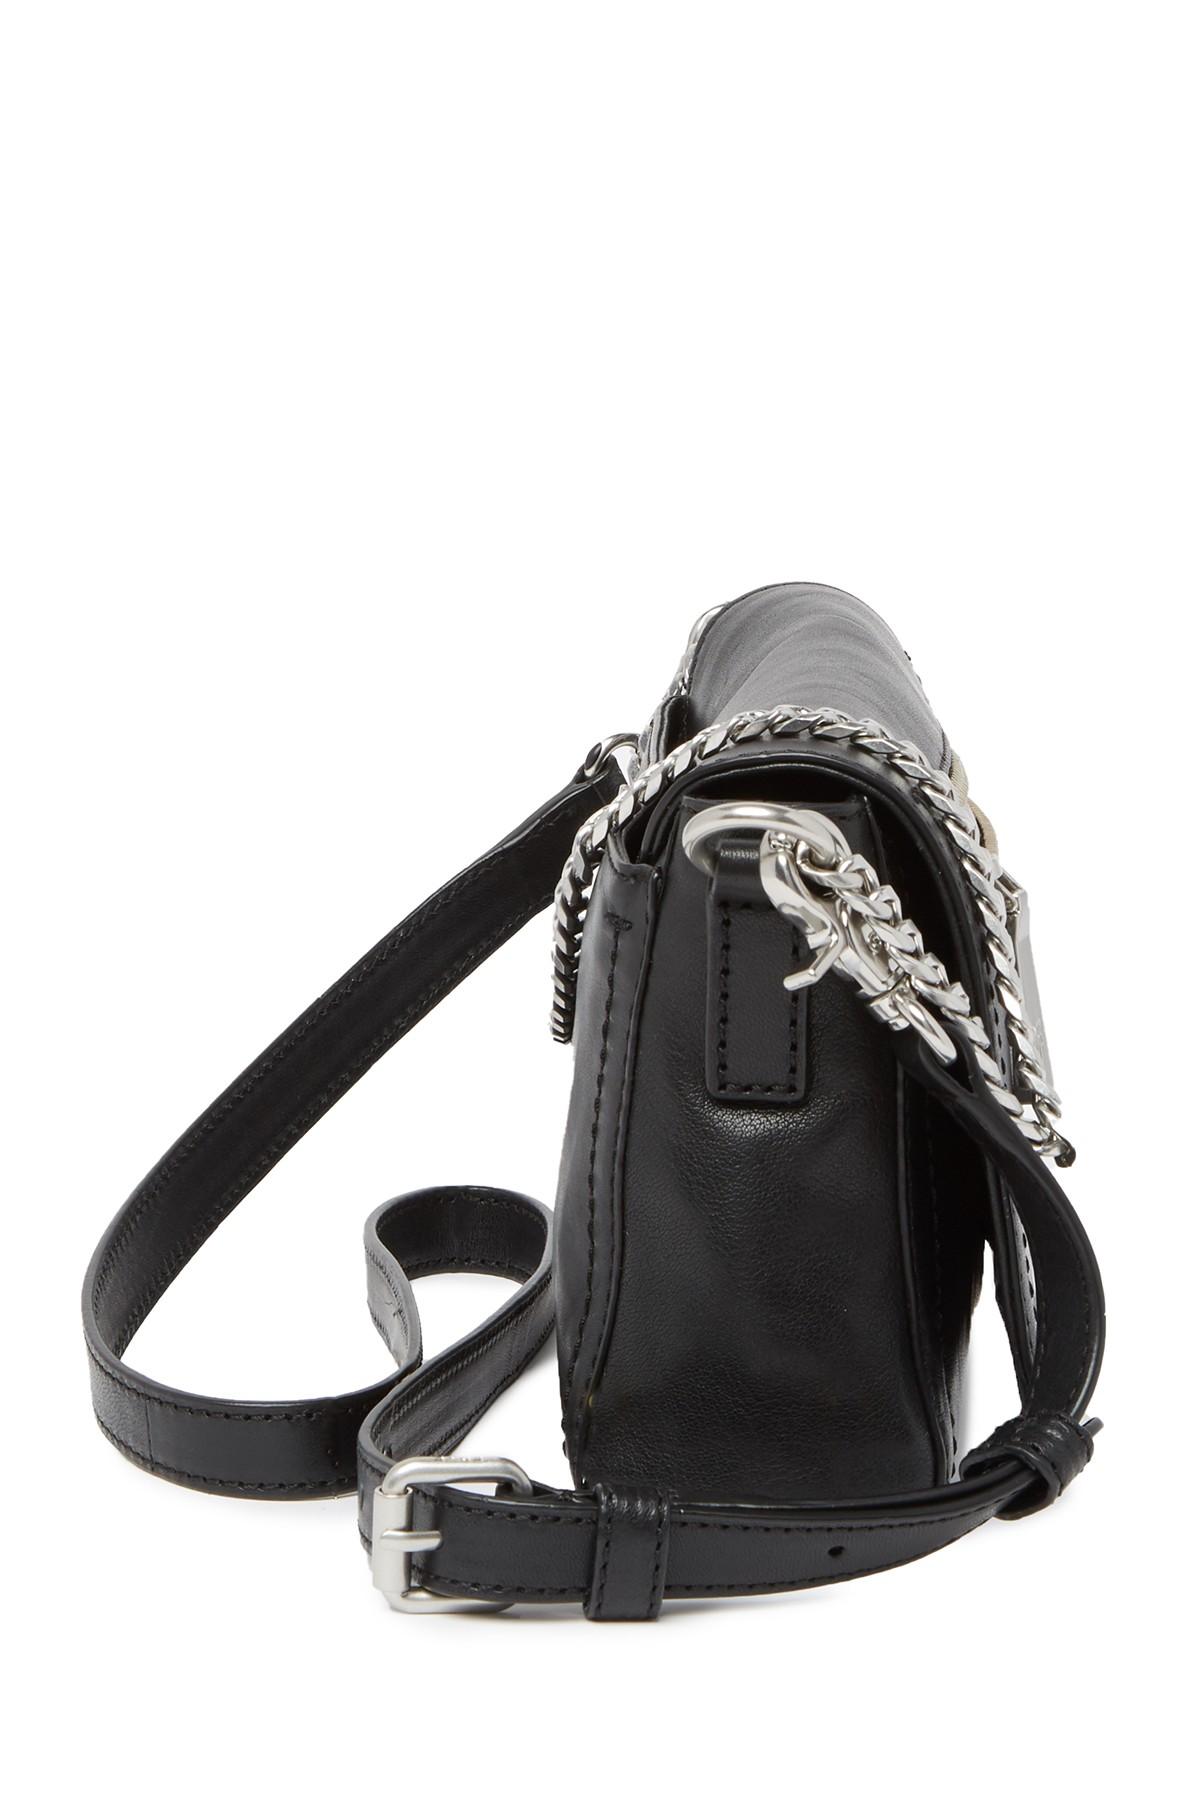 Frye Lena Chain Leather Crossbody Bag in Black - Lyst